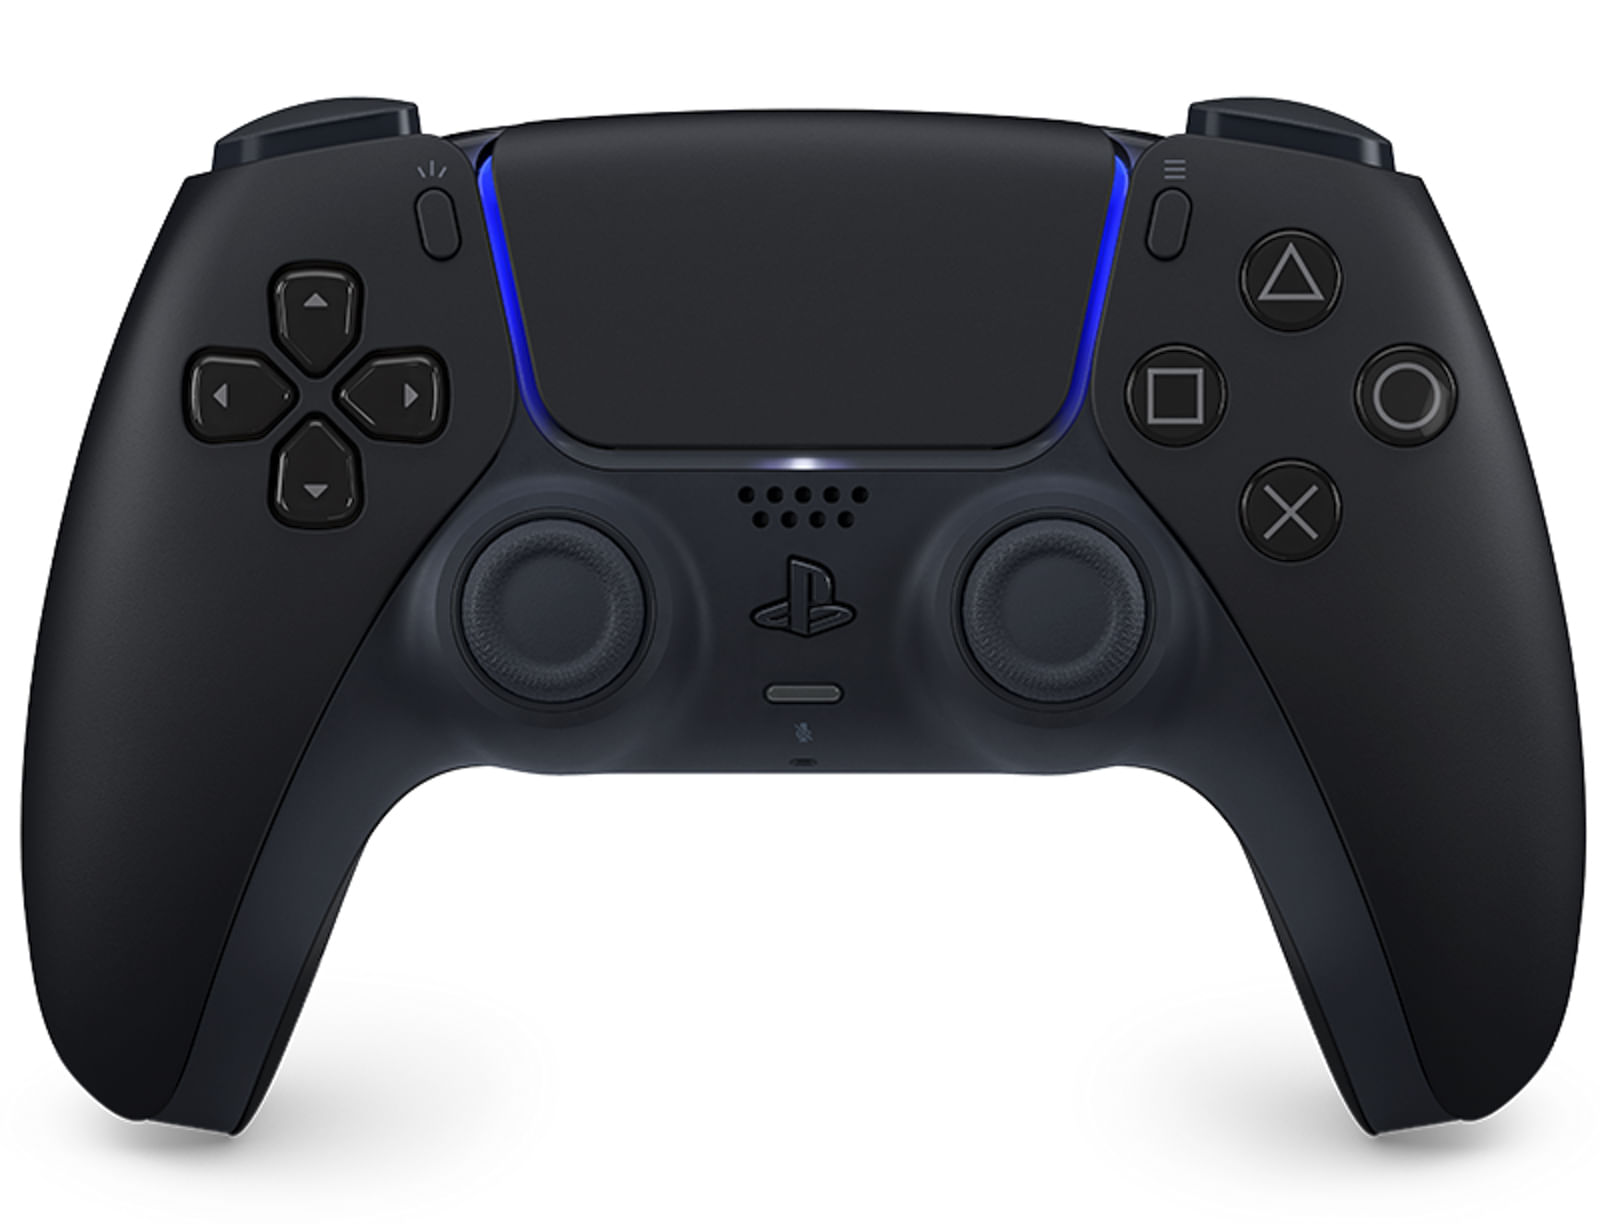 ⚡ Mando PS5 NEGRO Scuf Palancas MEGA GRIP ▷ DualSense PlayStation 5  Competición